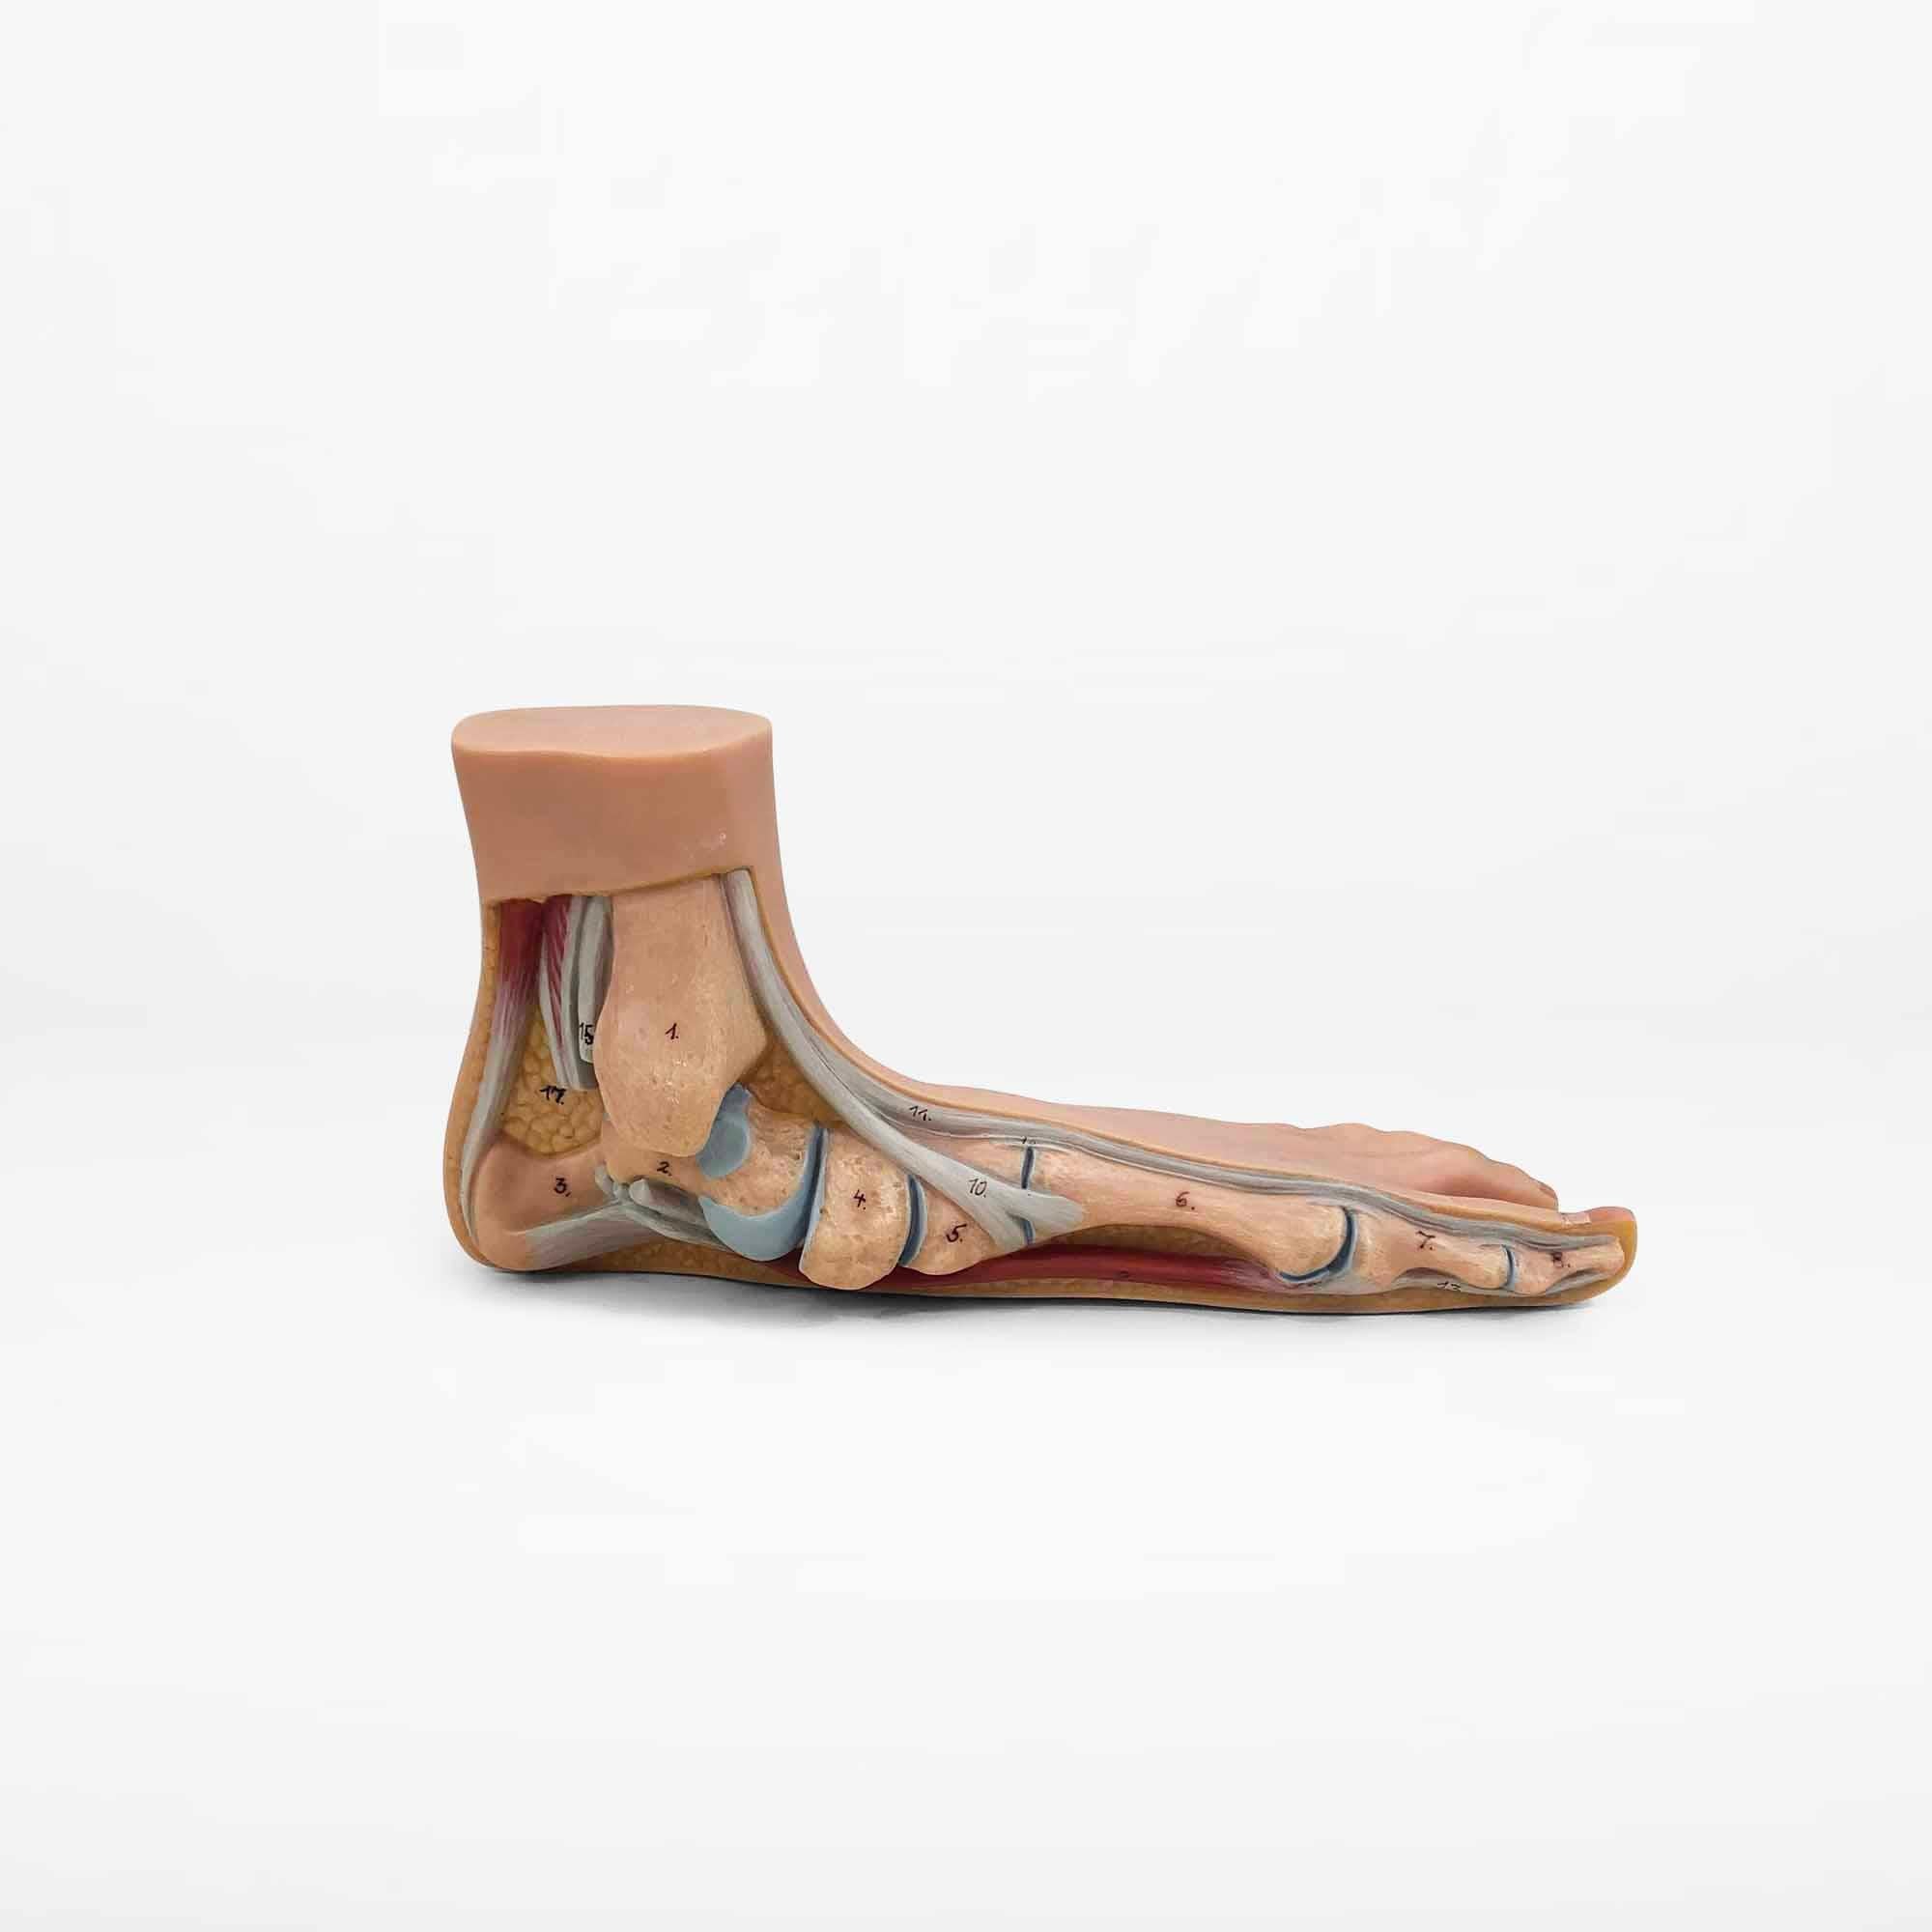 Plastic Vintage Anatomical Model of 3 Human Feet, Set of 3